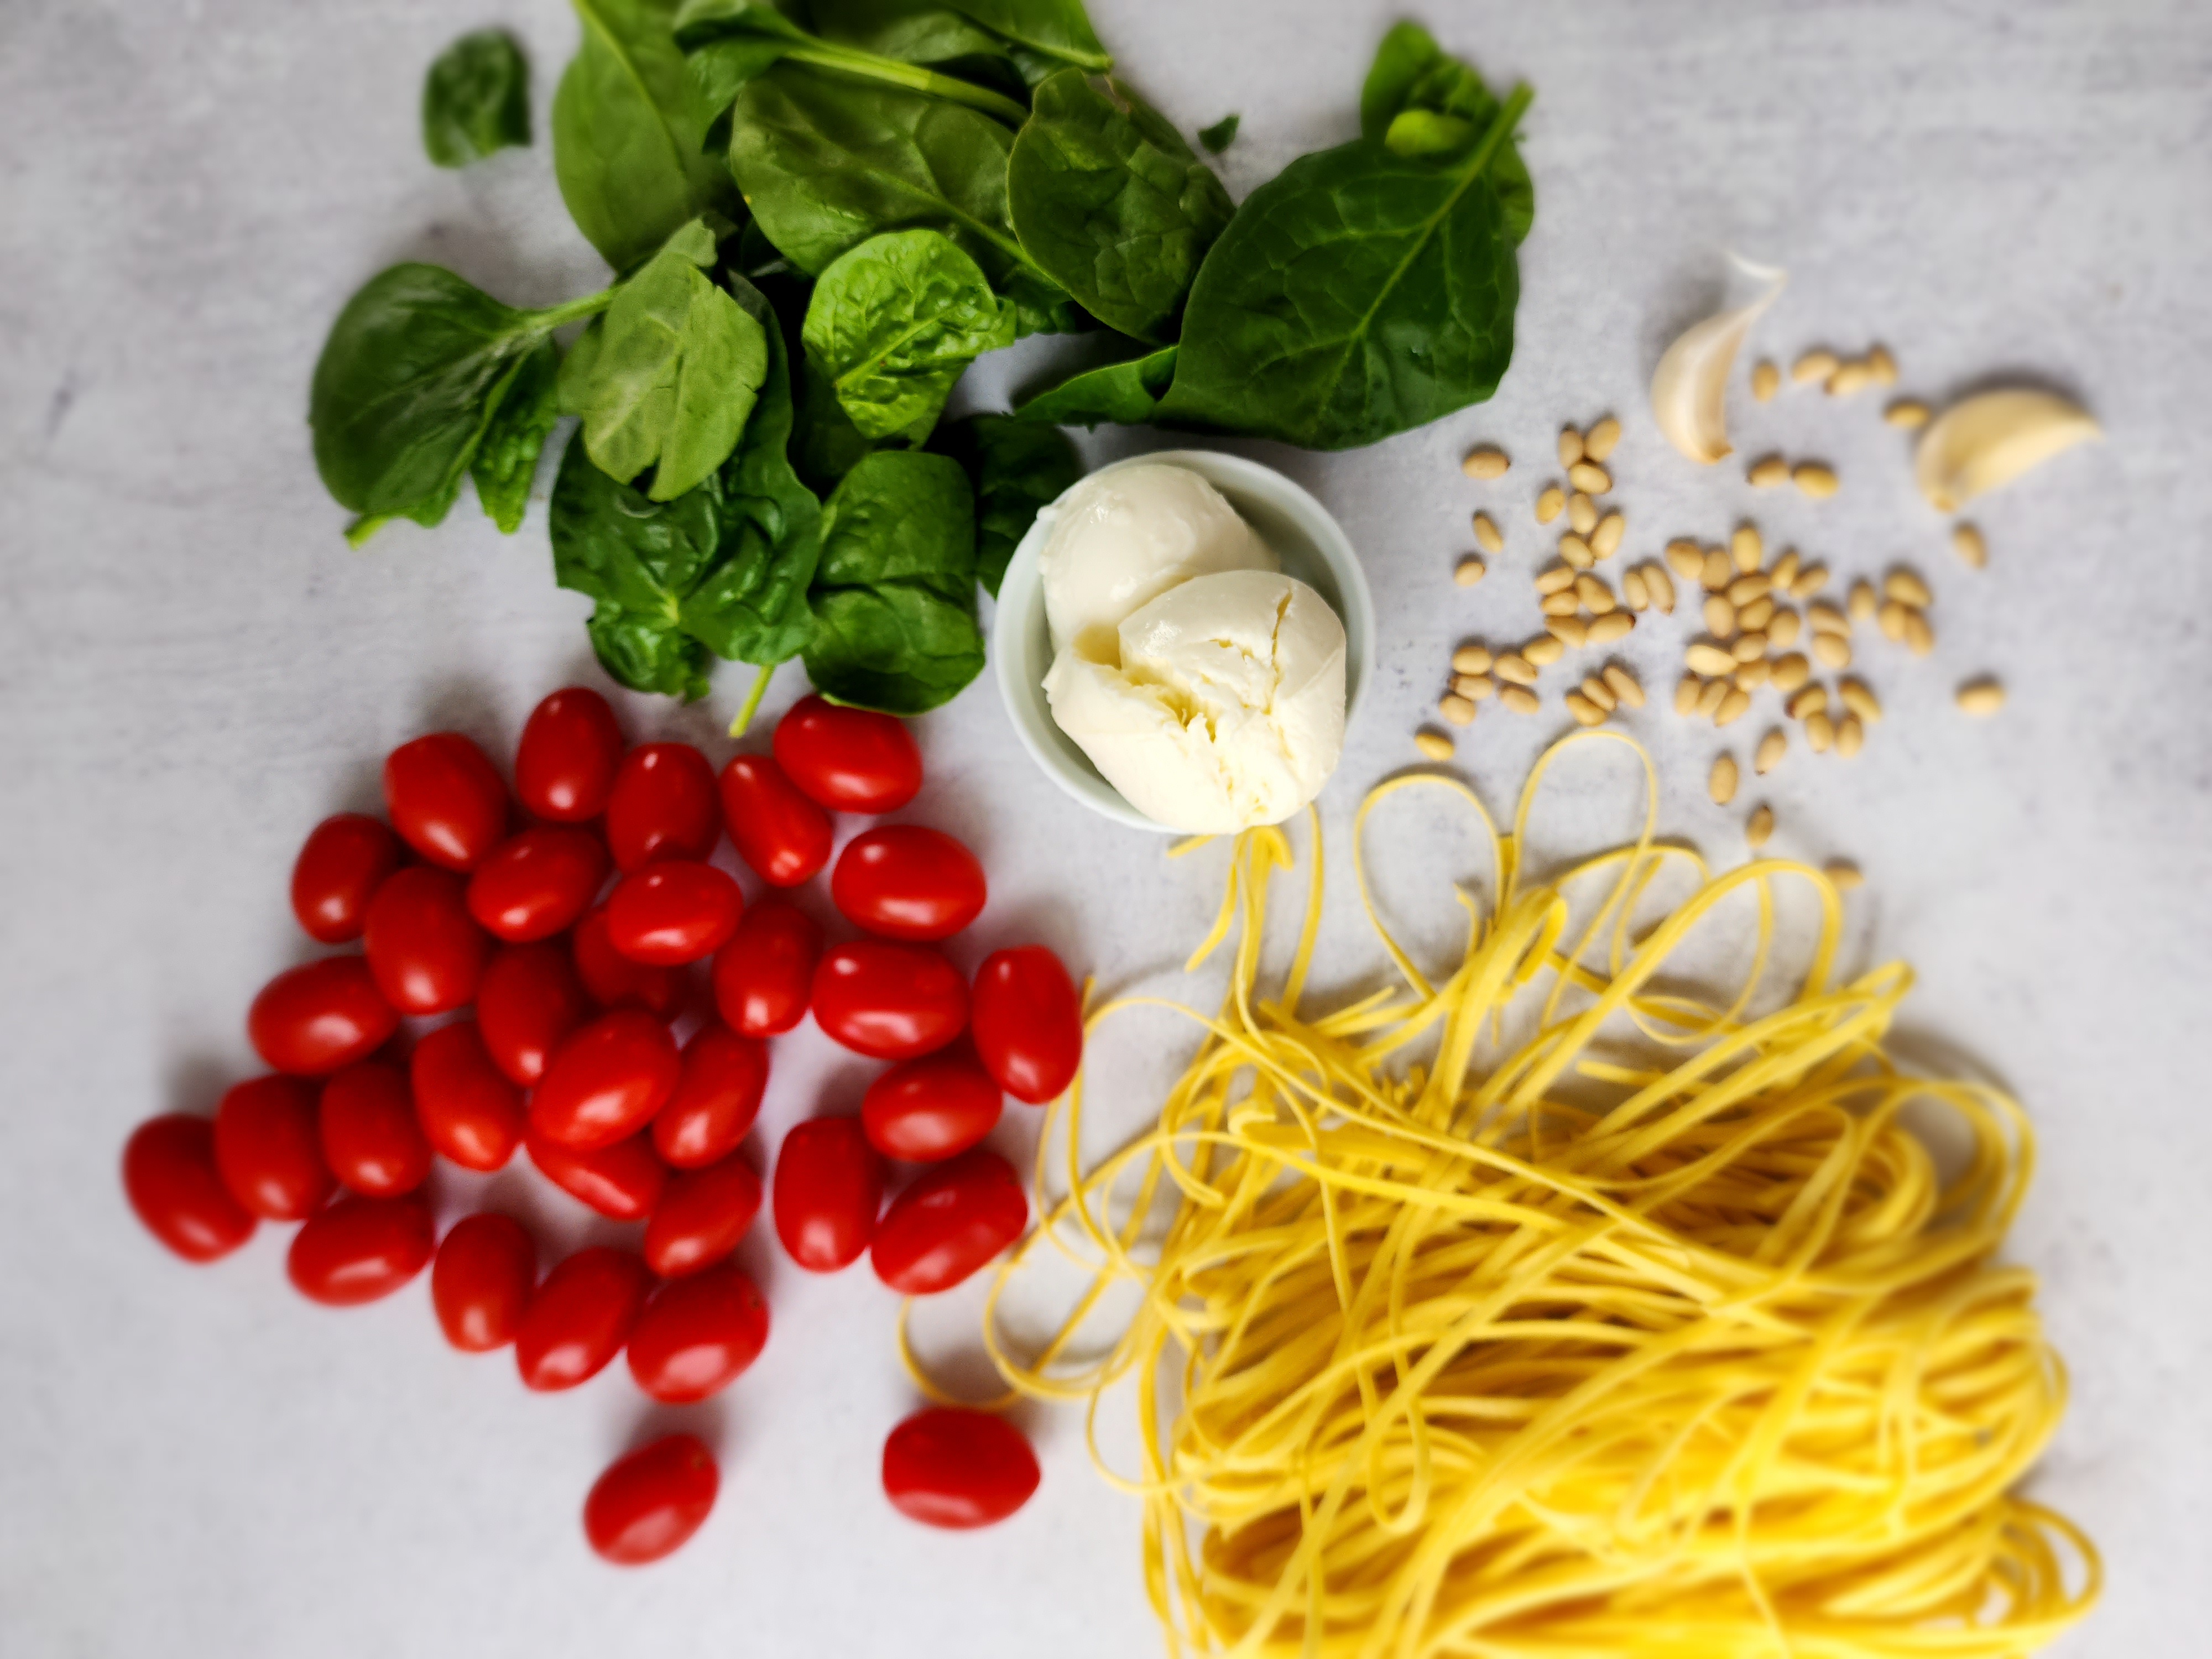 Ingredients for Easy Burrata Pasta: Pasta, Garlic, Burrata Cheese, Tomatoes, Spinach